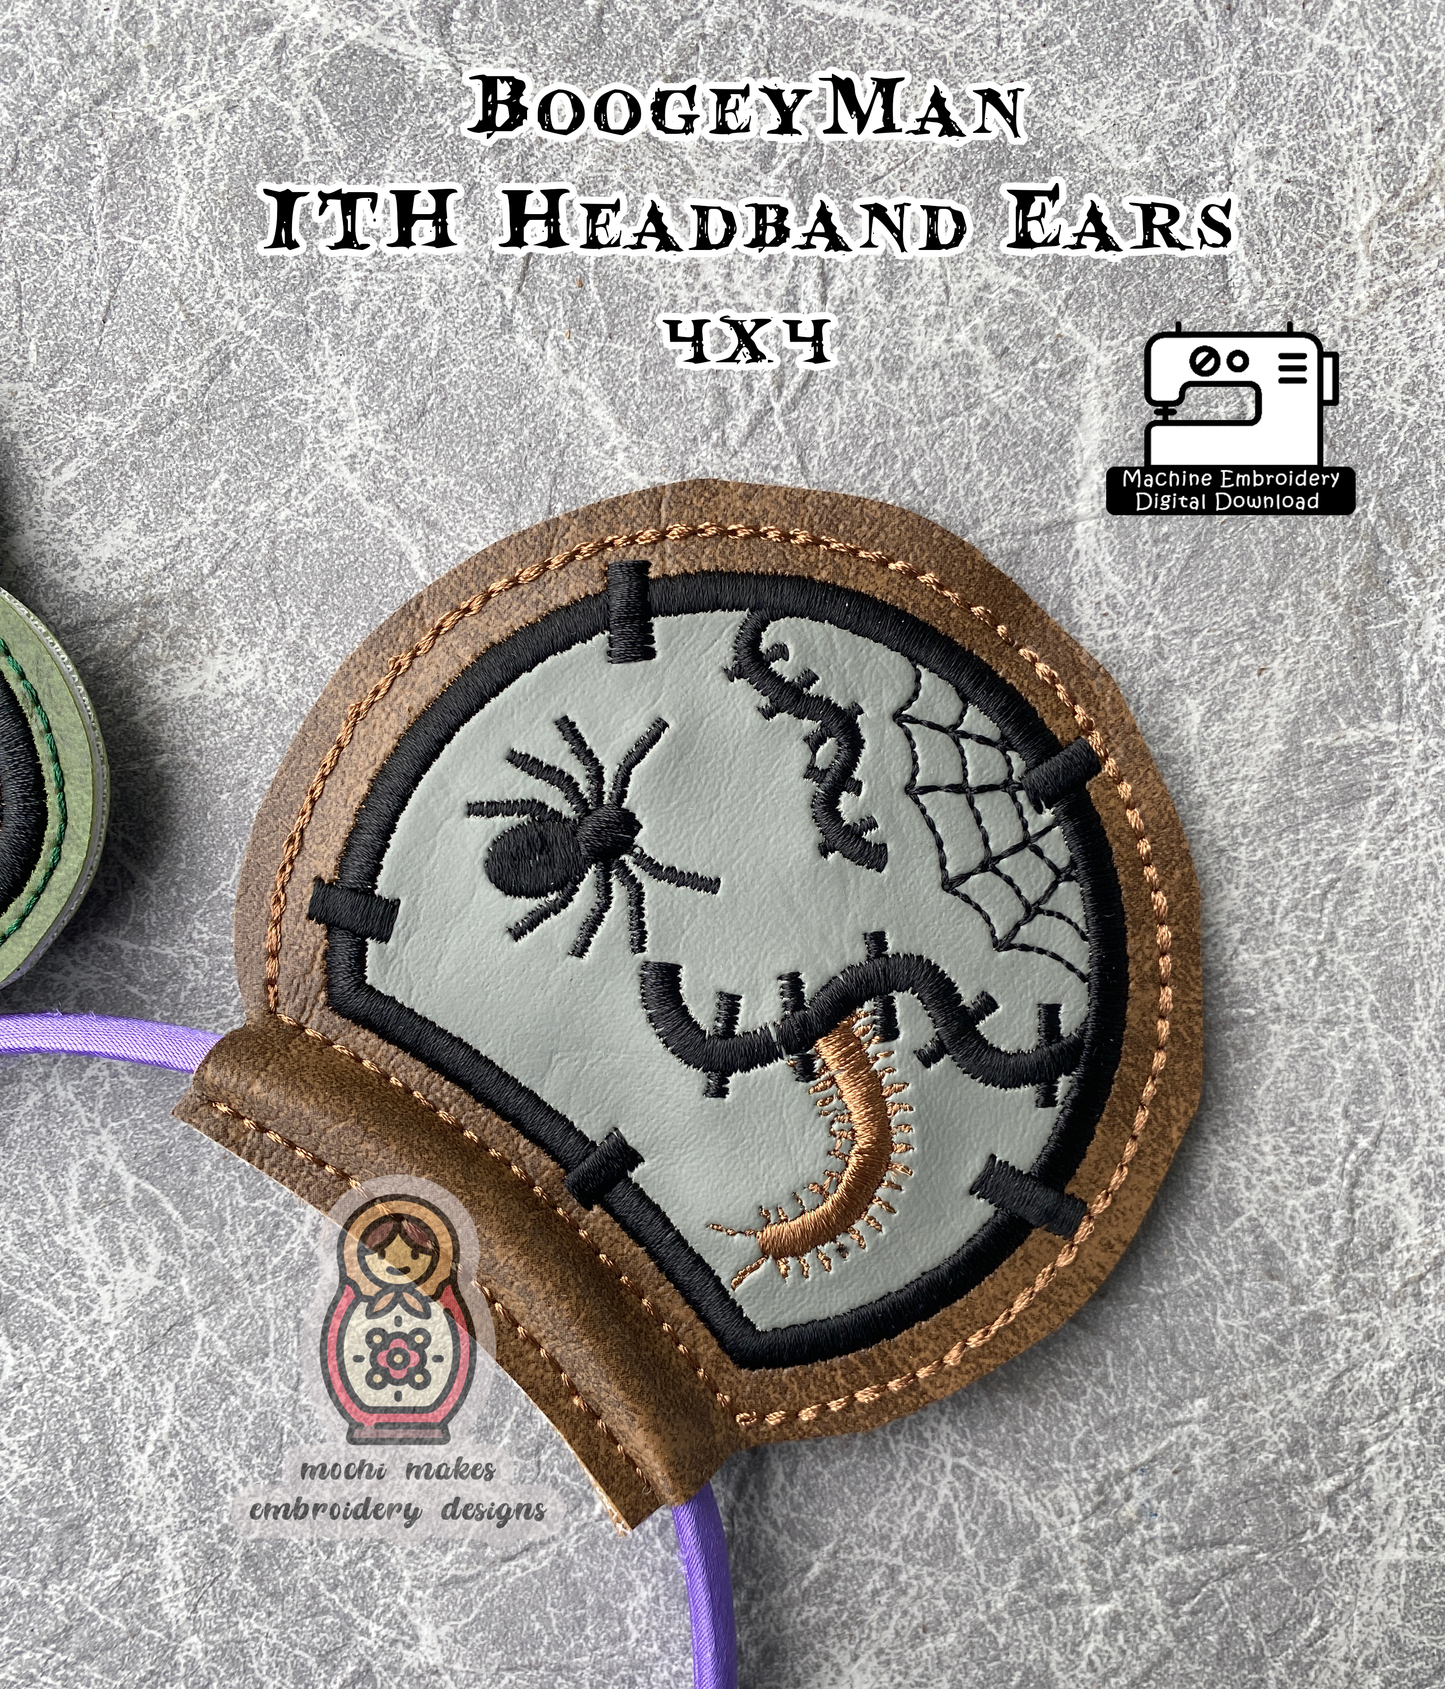 Boogeyman ITH Headband Ears 4x4 Halloween Ghost Spooky Gothic DIY Cosplay Pattern Skeleton Embroidery Sew Digital Download Boogey Nightmare